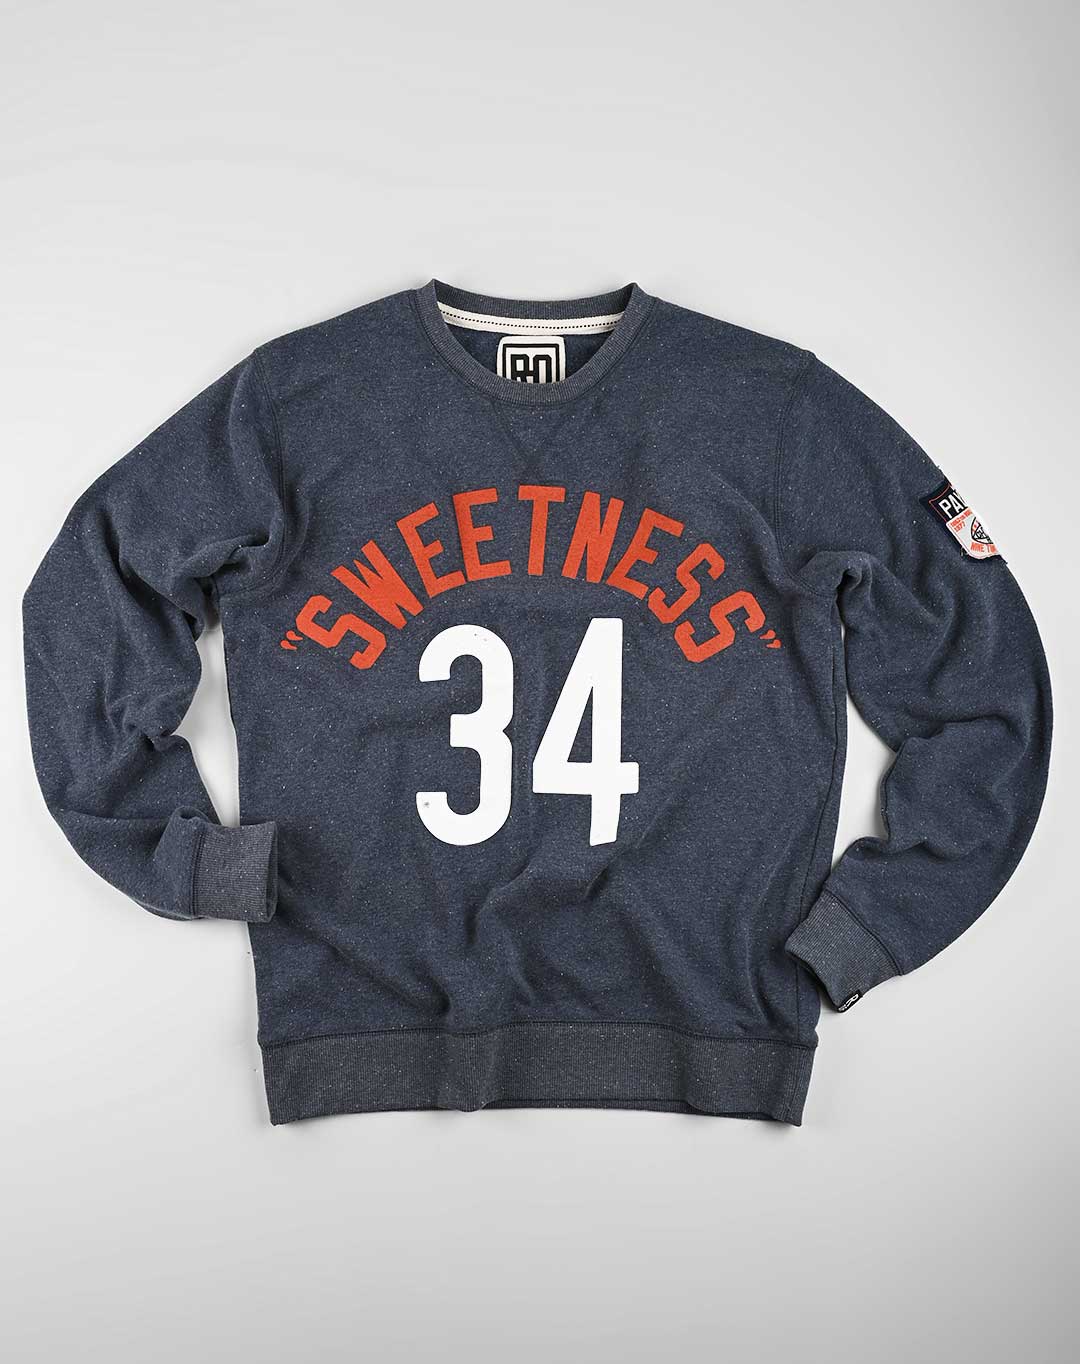 Payton Sweetness #34 Navy Sweatshirt - Roots of Fight Canada